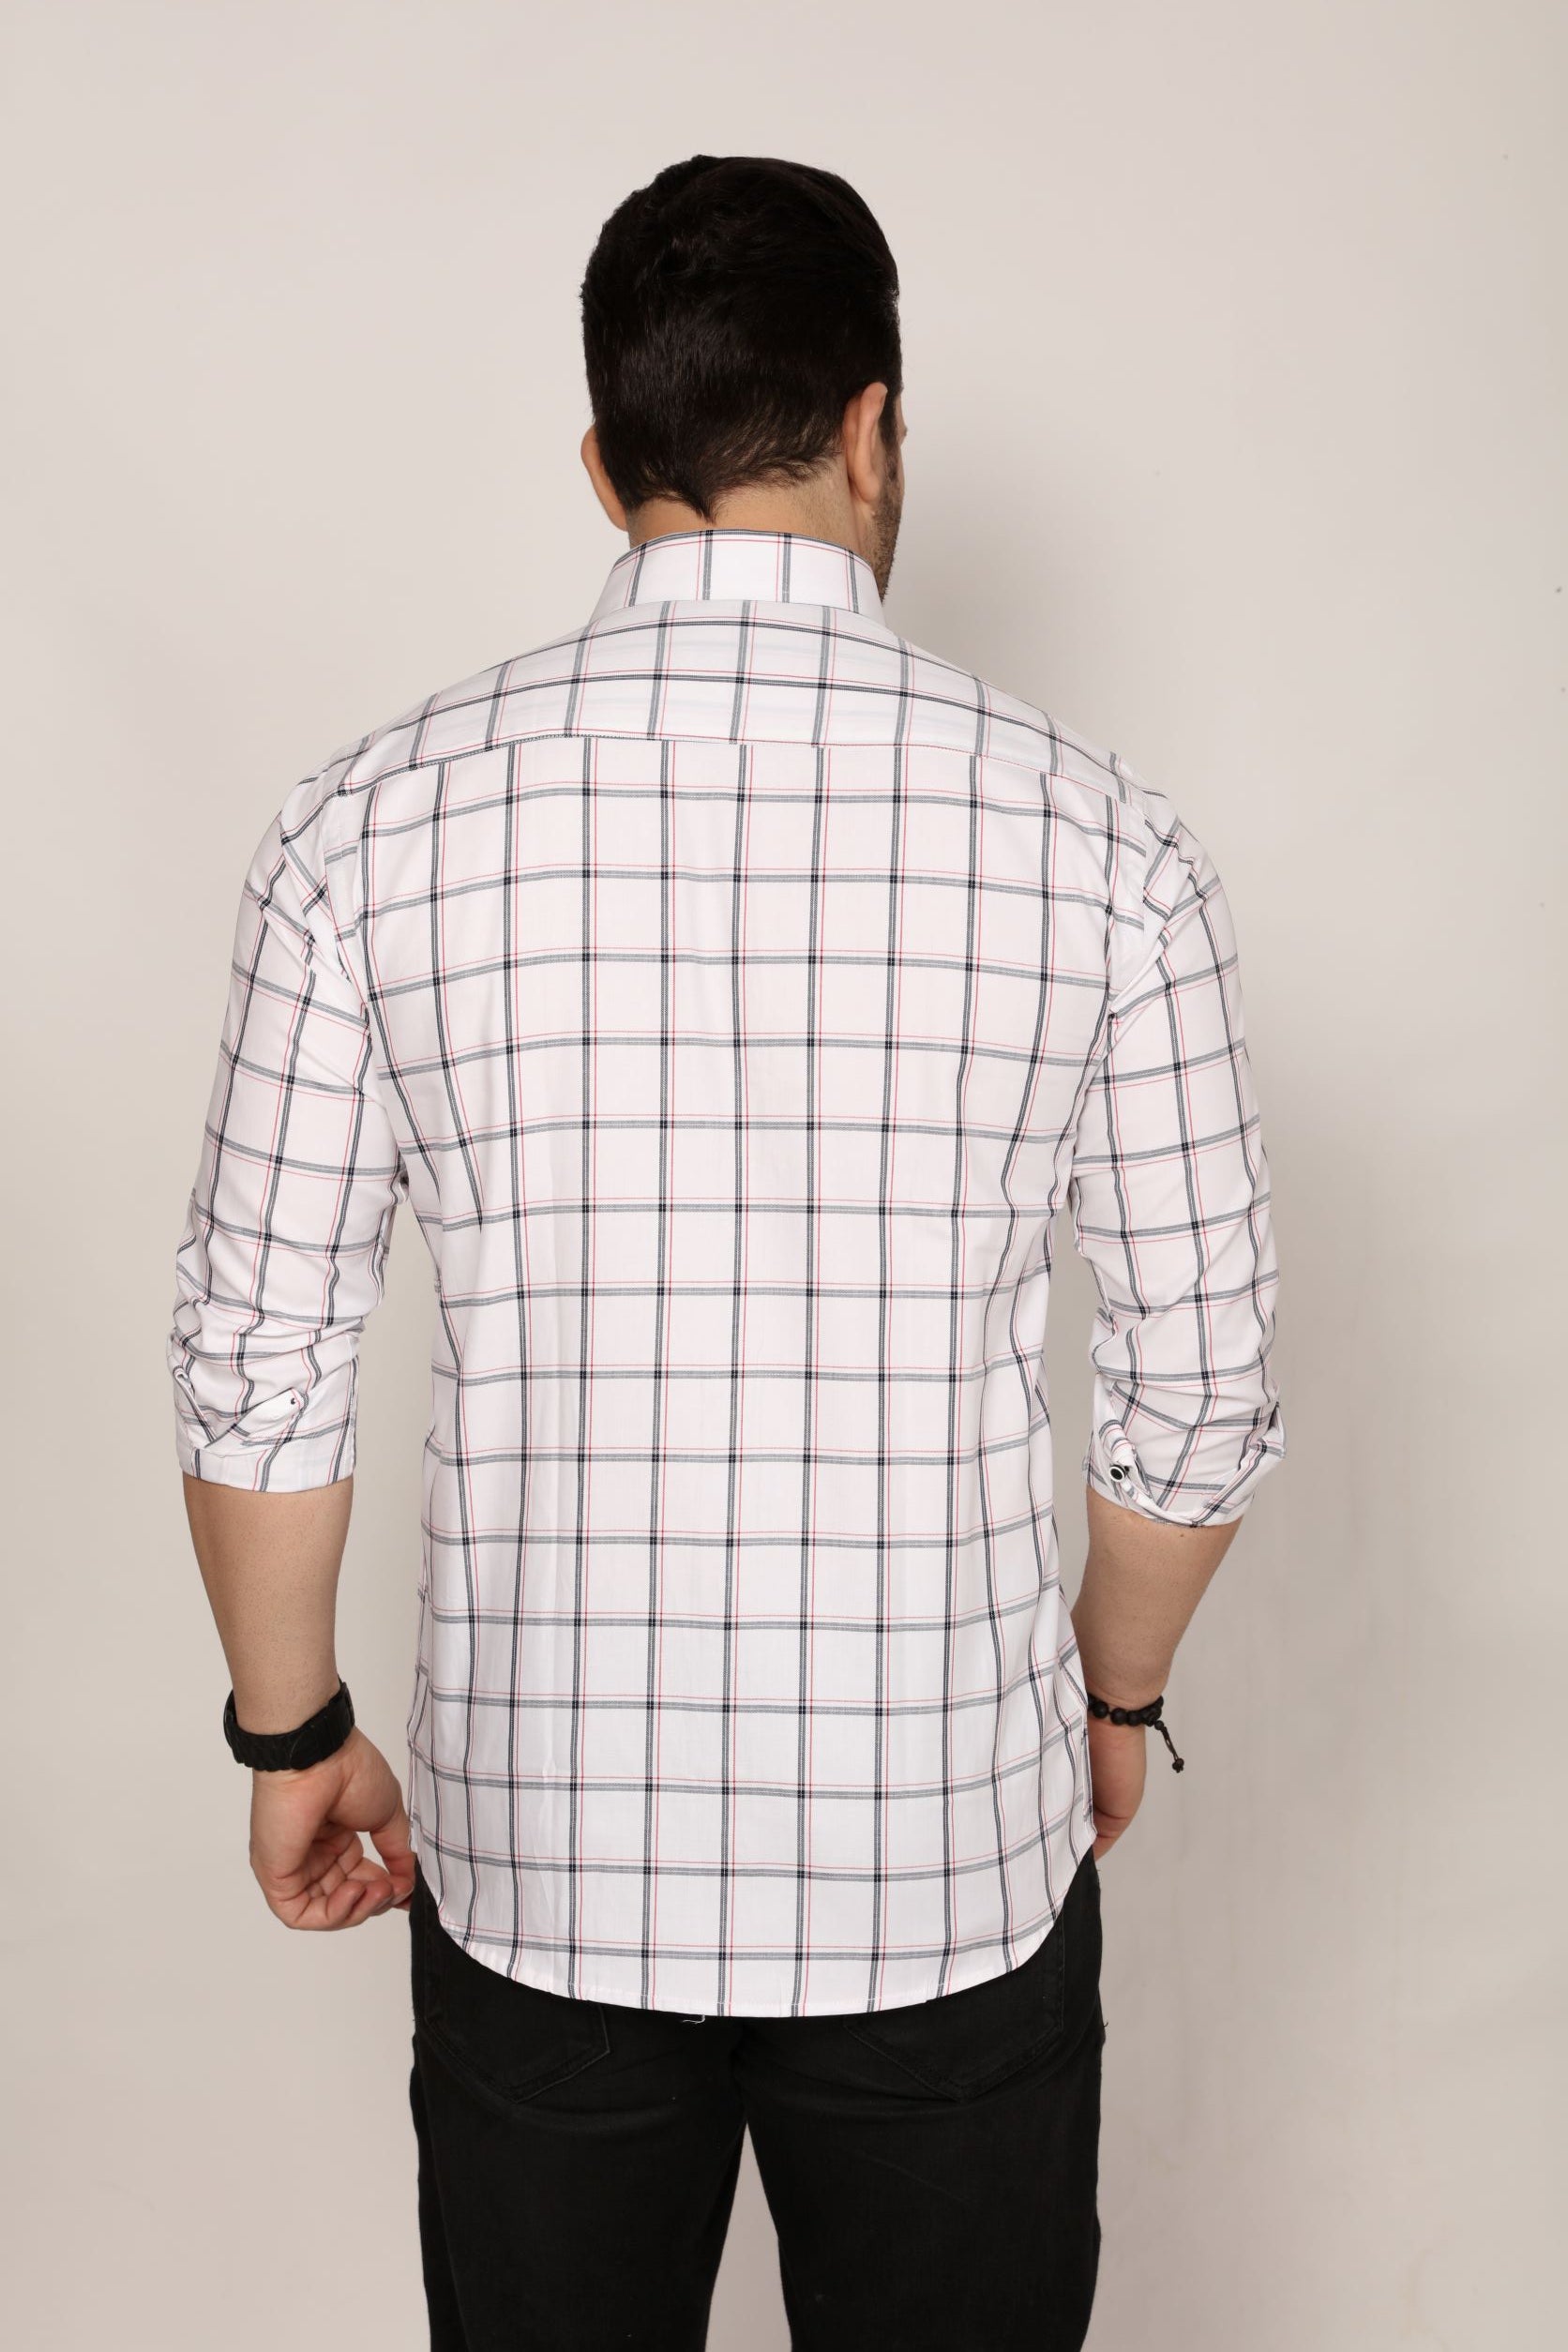 Sheffield - Checkered slim fit shirt - John Watson